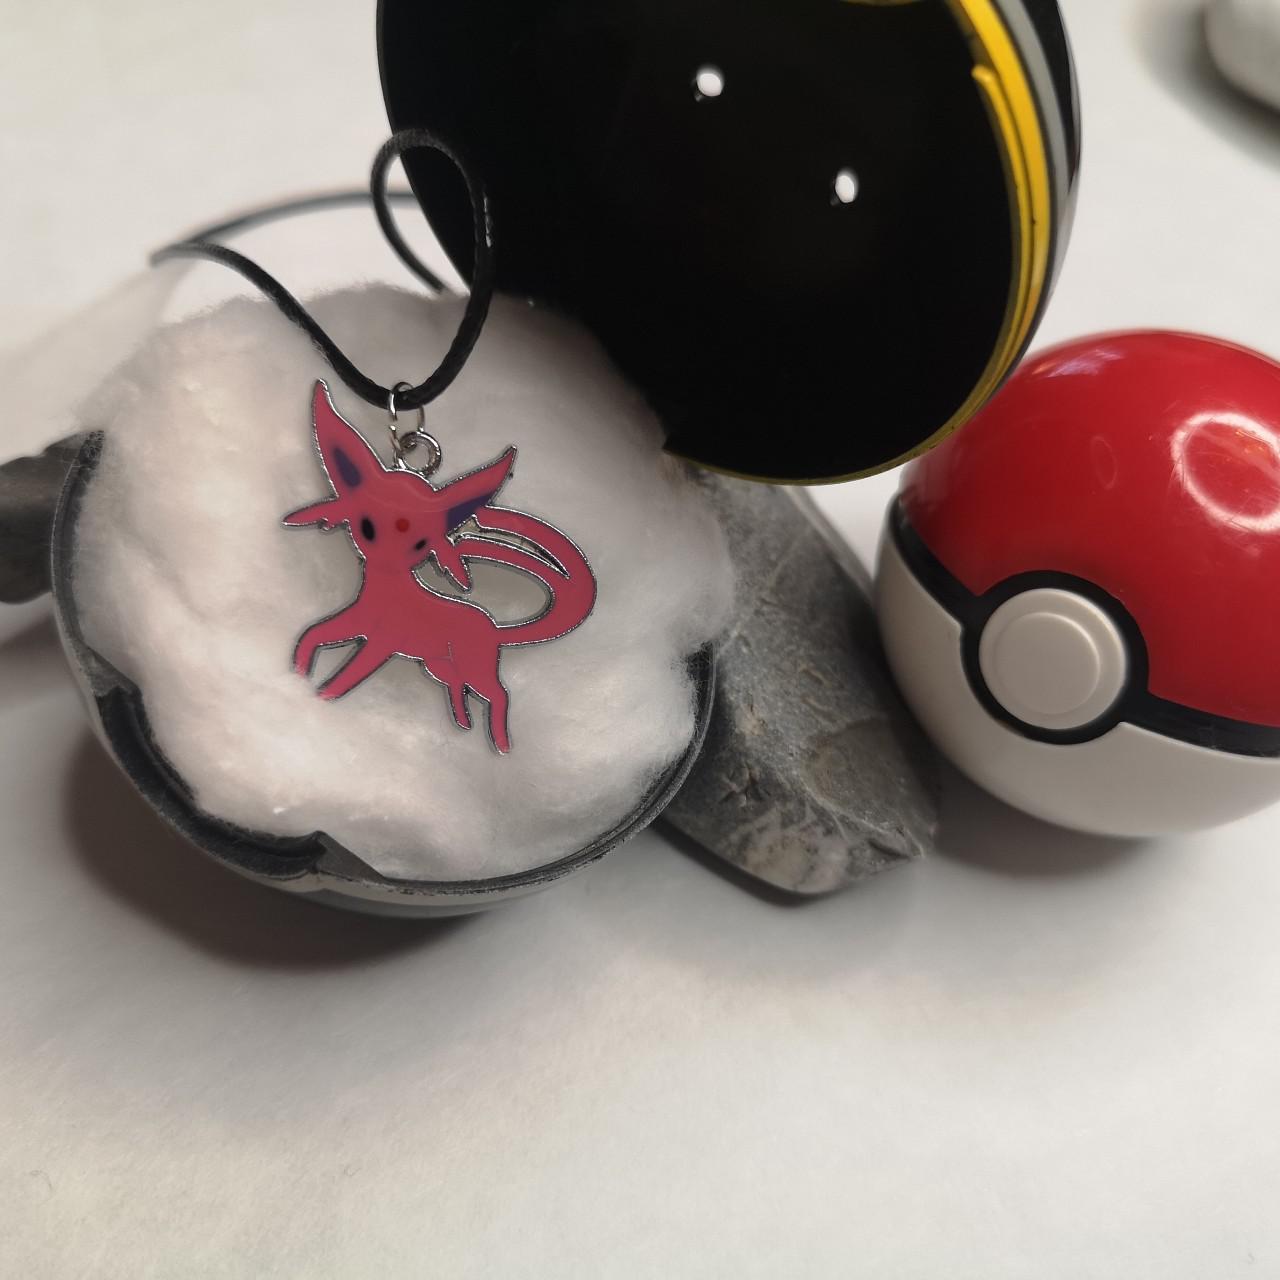 Product Image 4 - Espeon Pendant Pokemon Pendant Necklace
Customise